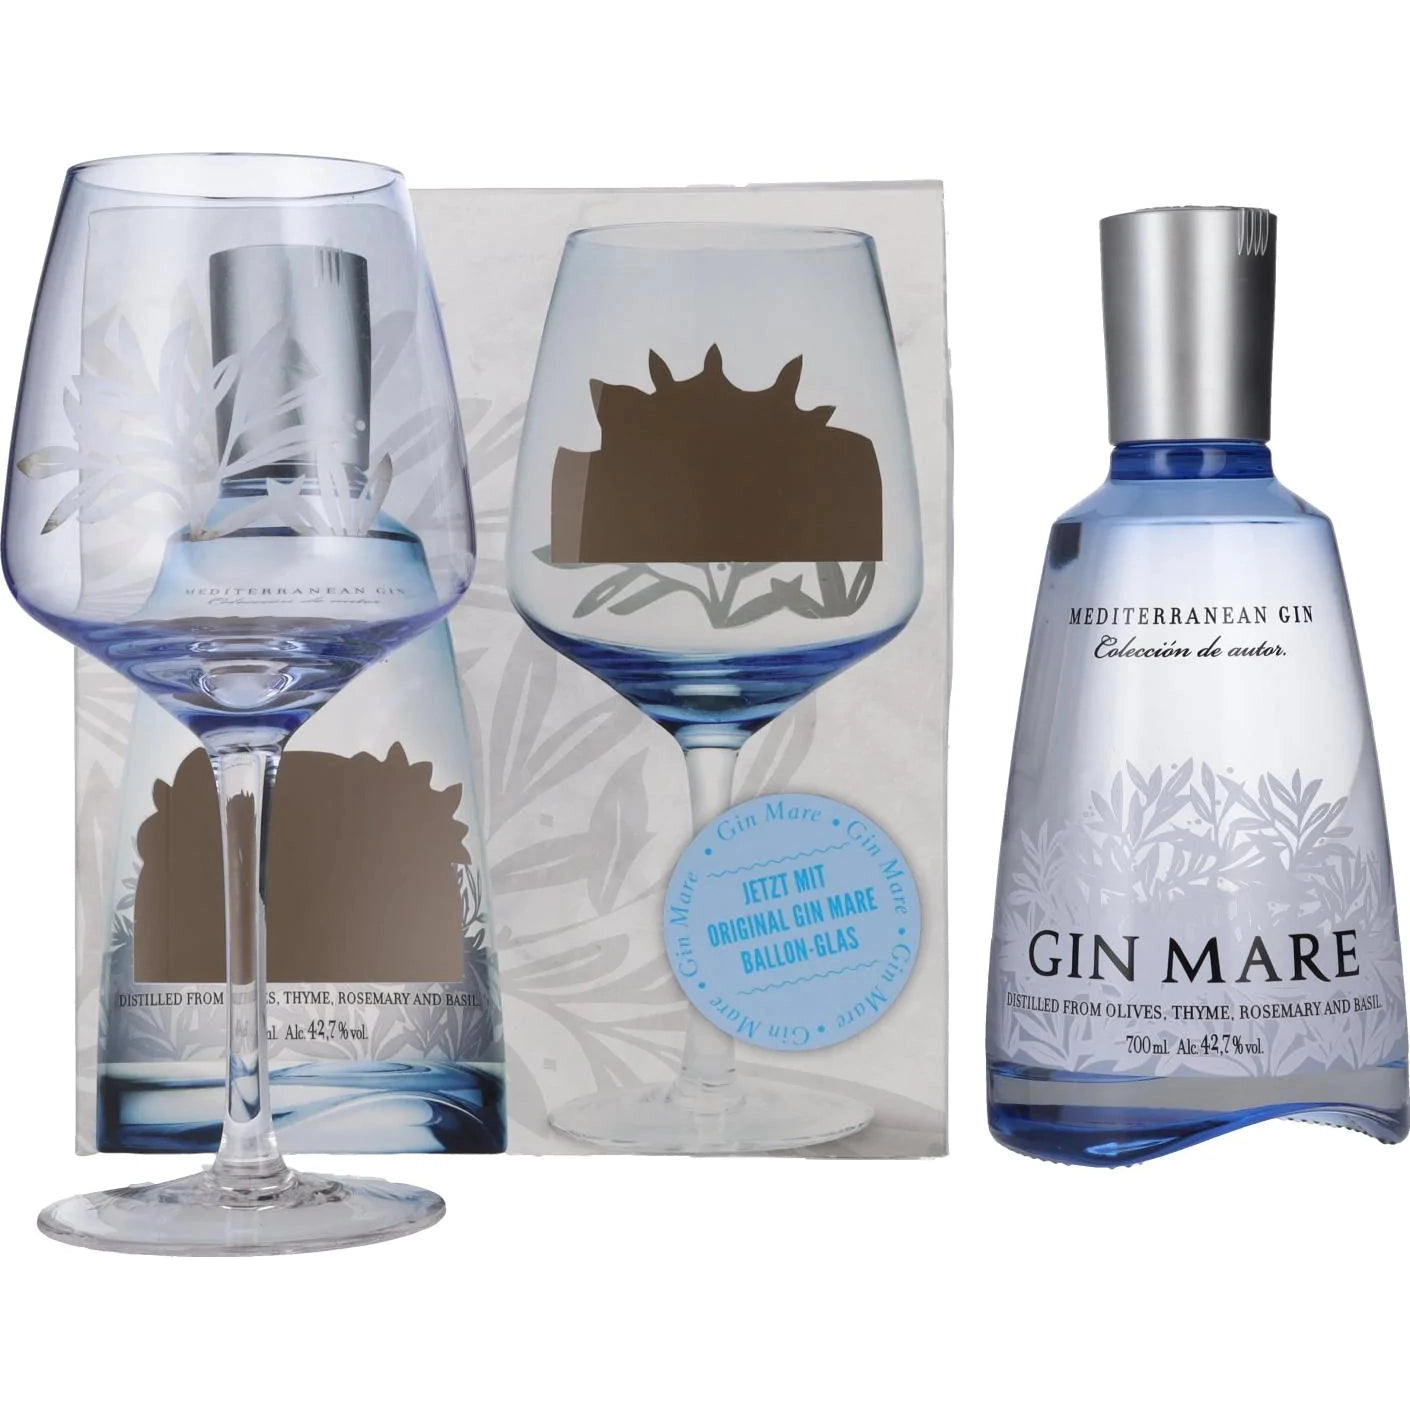 Mediterranean 0,7l glass Gin Vol. in 42,7% with Gin Giftbox Mare